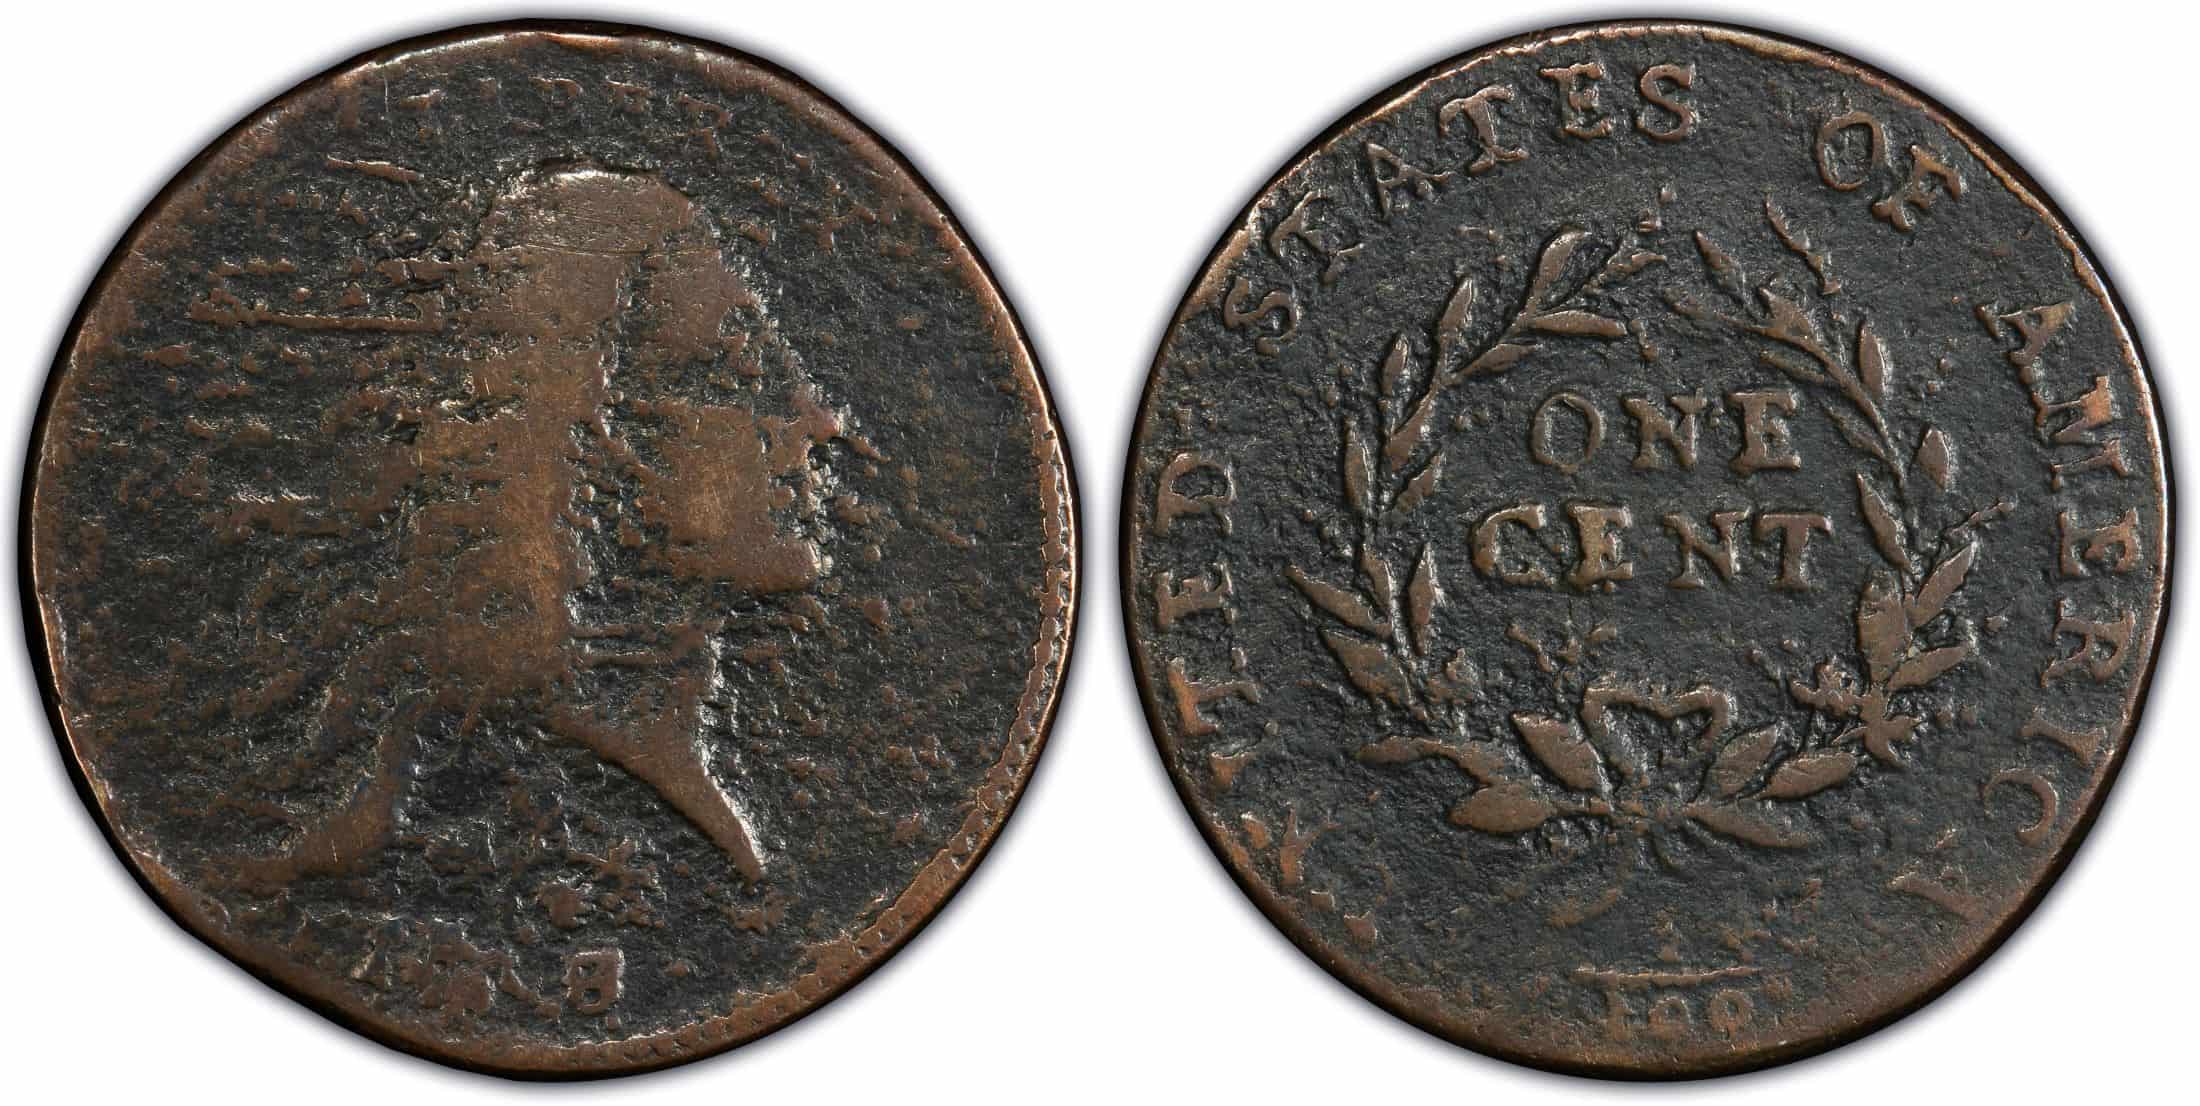 1793 Strawberry Leaf Cent - $862,500